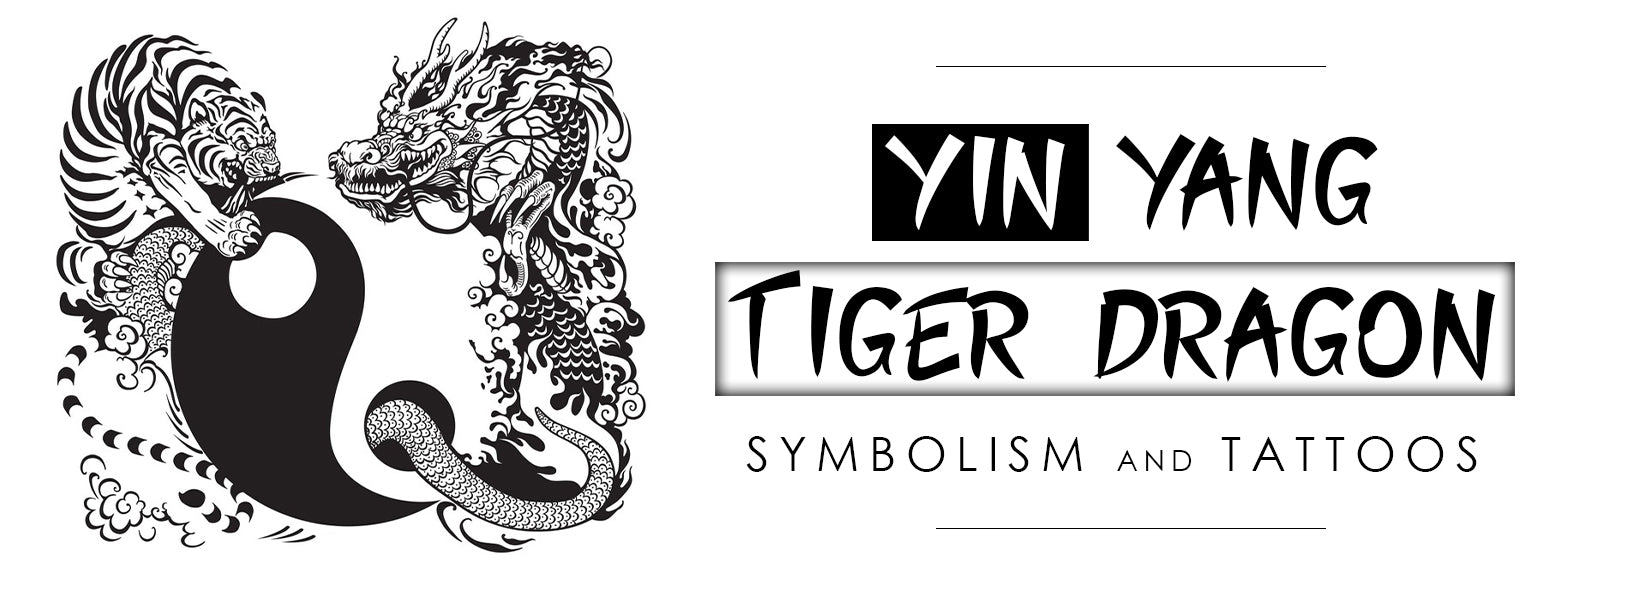 Tiger vs Dragon tattoo mywall by Lechadias on DeviantArt